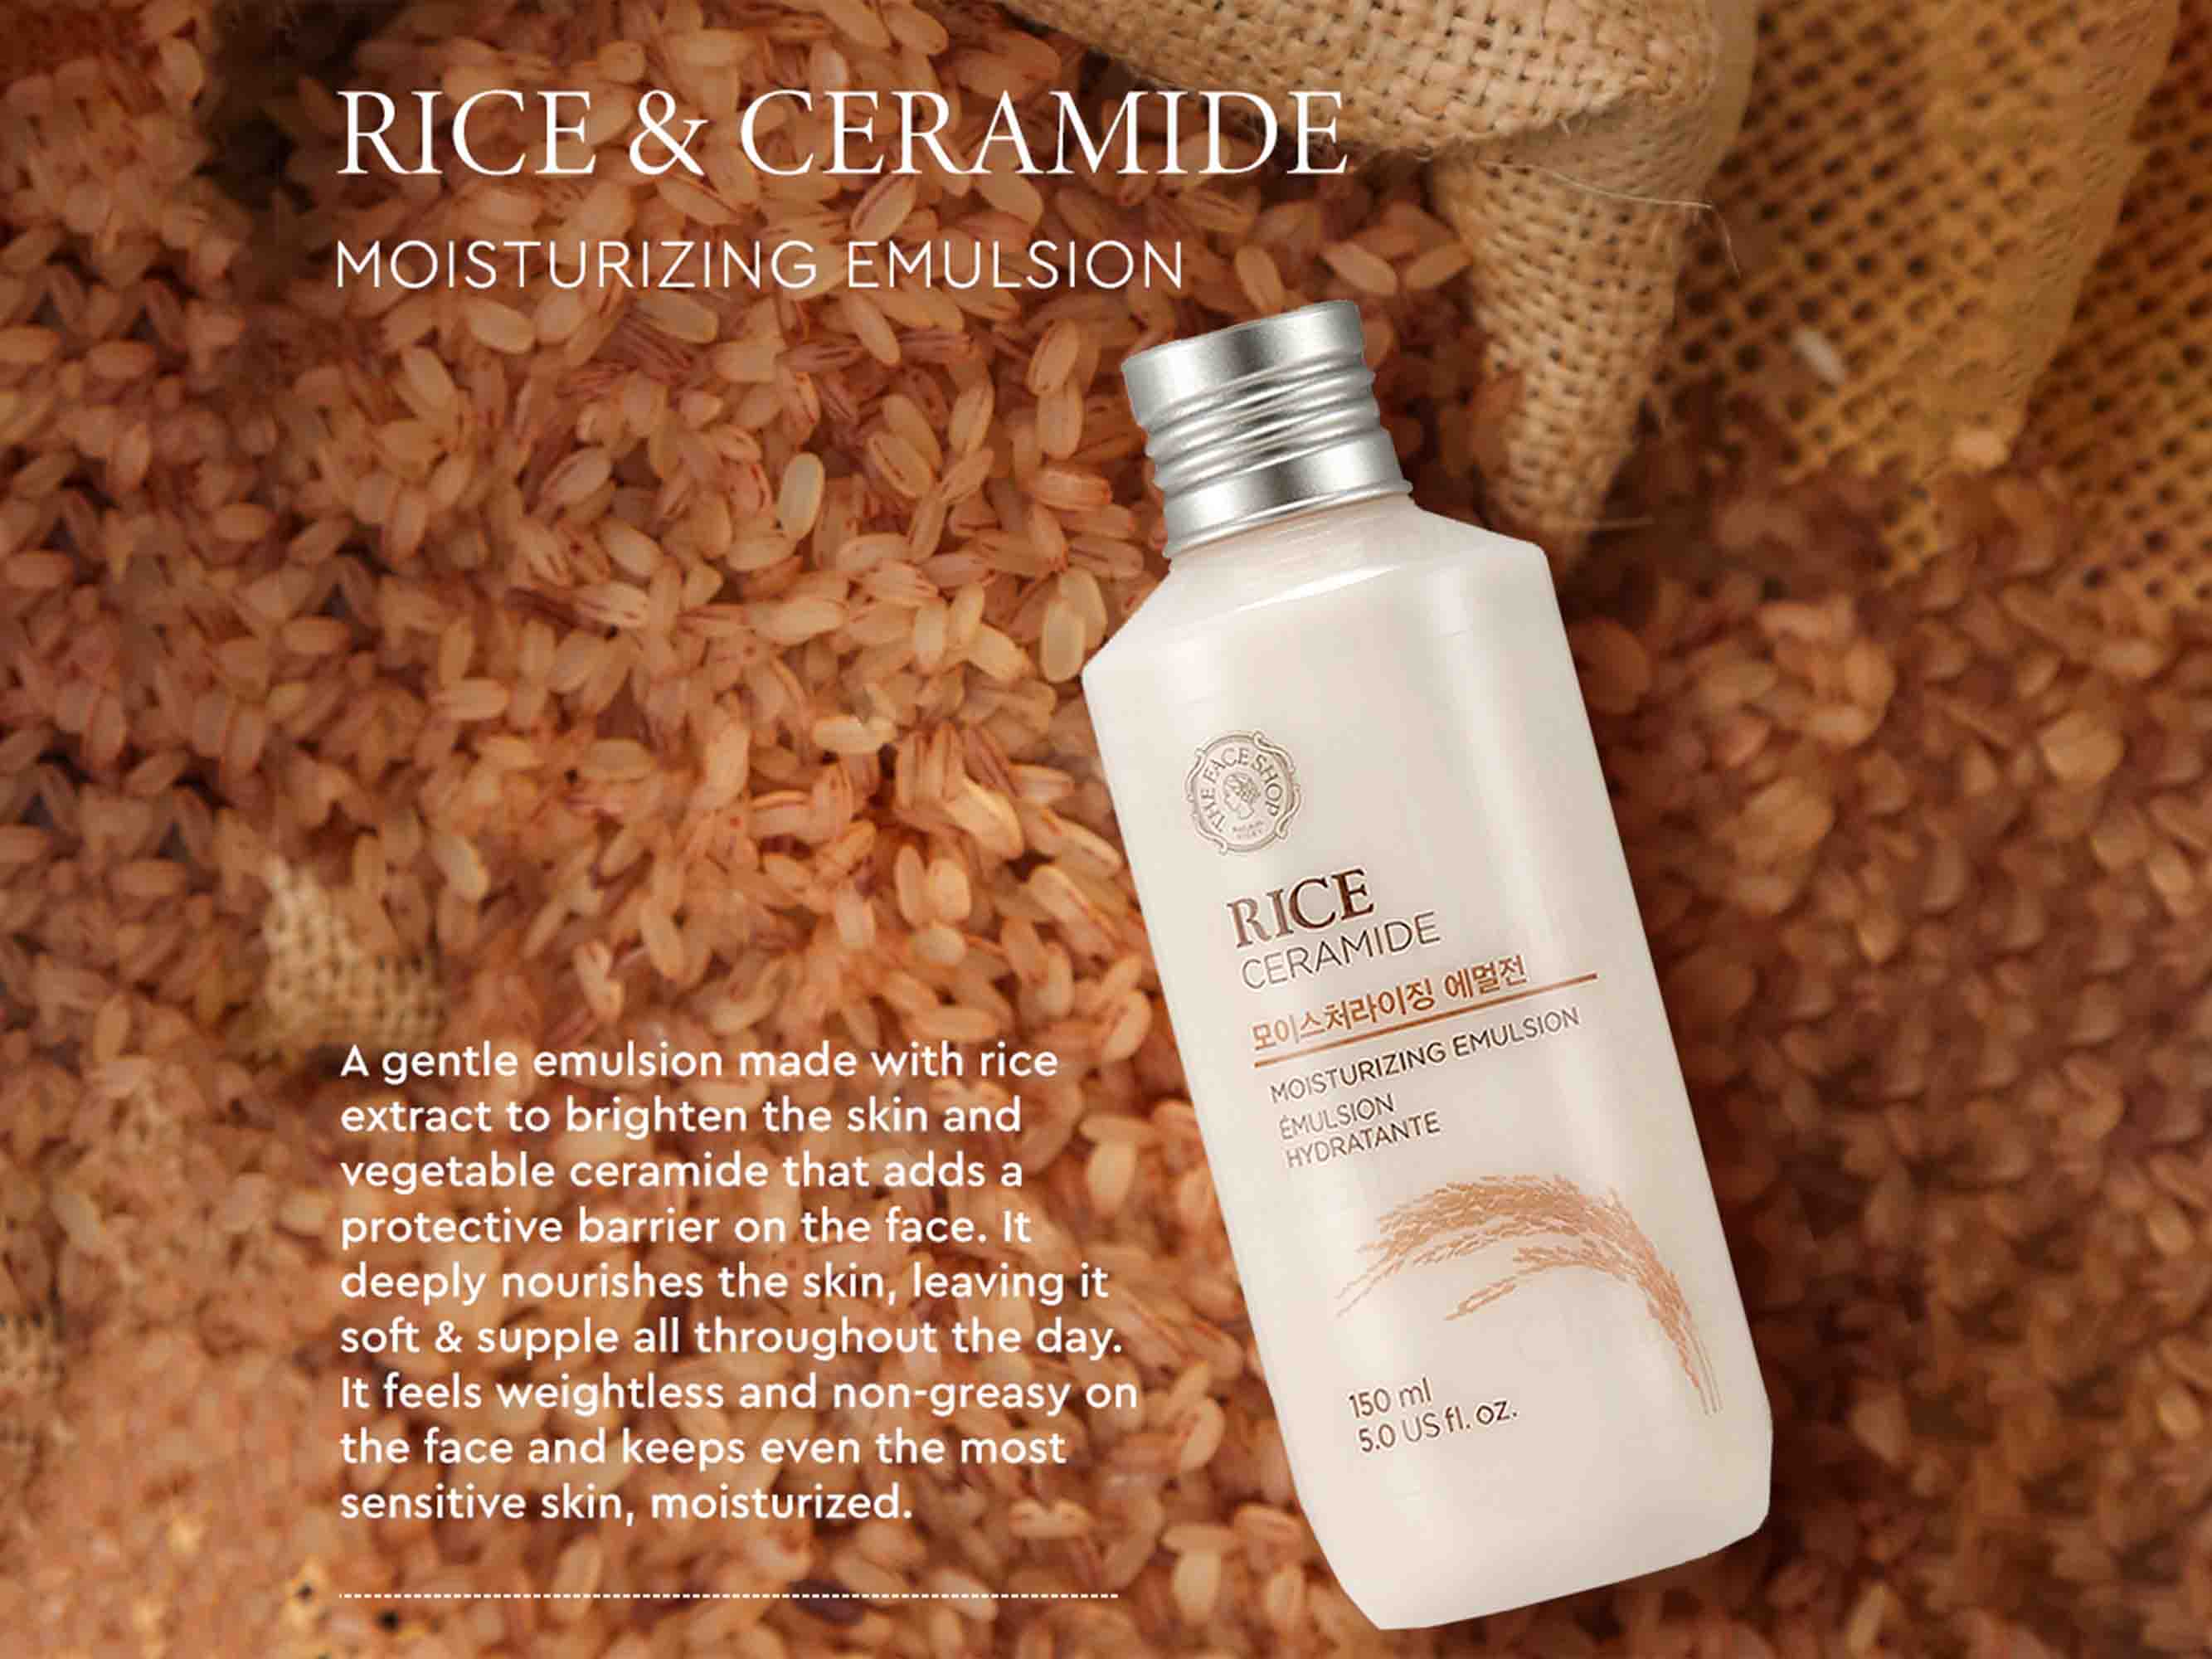 The Face Shop Rice & Ceramide Moisturizing Emulsion